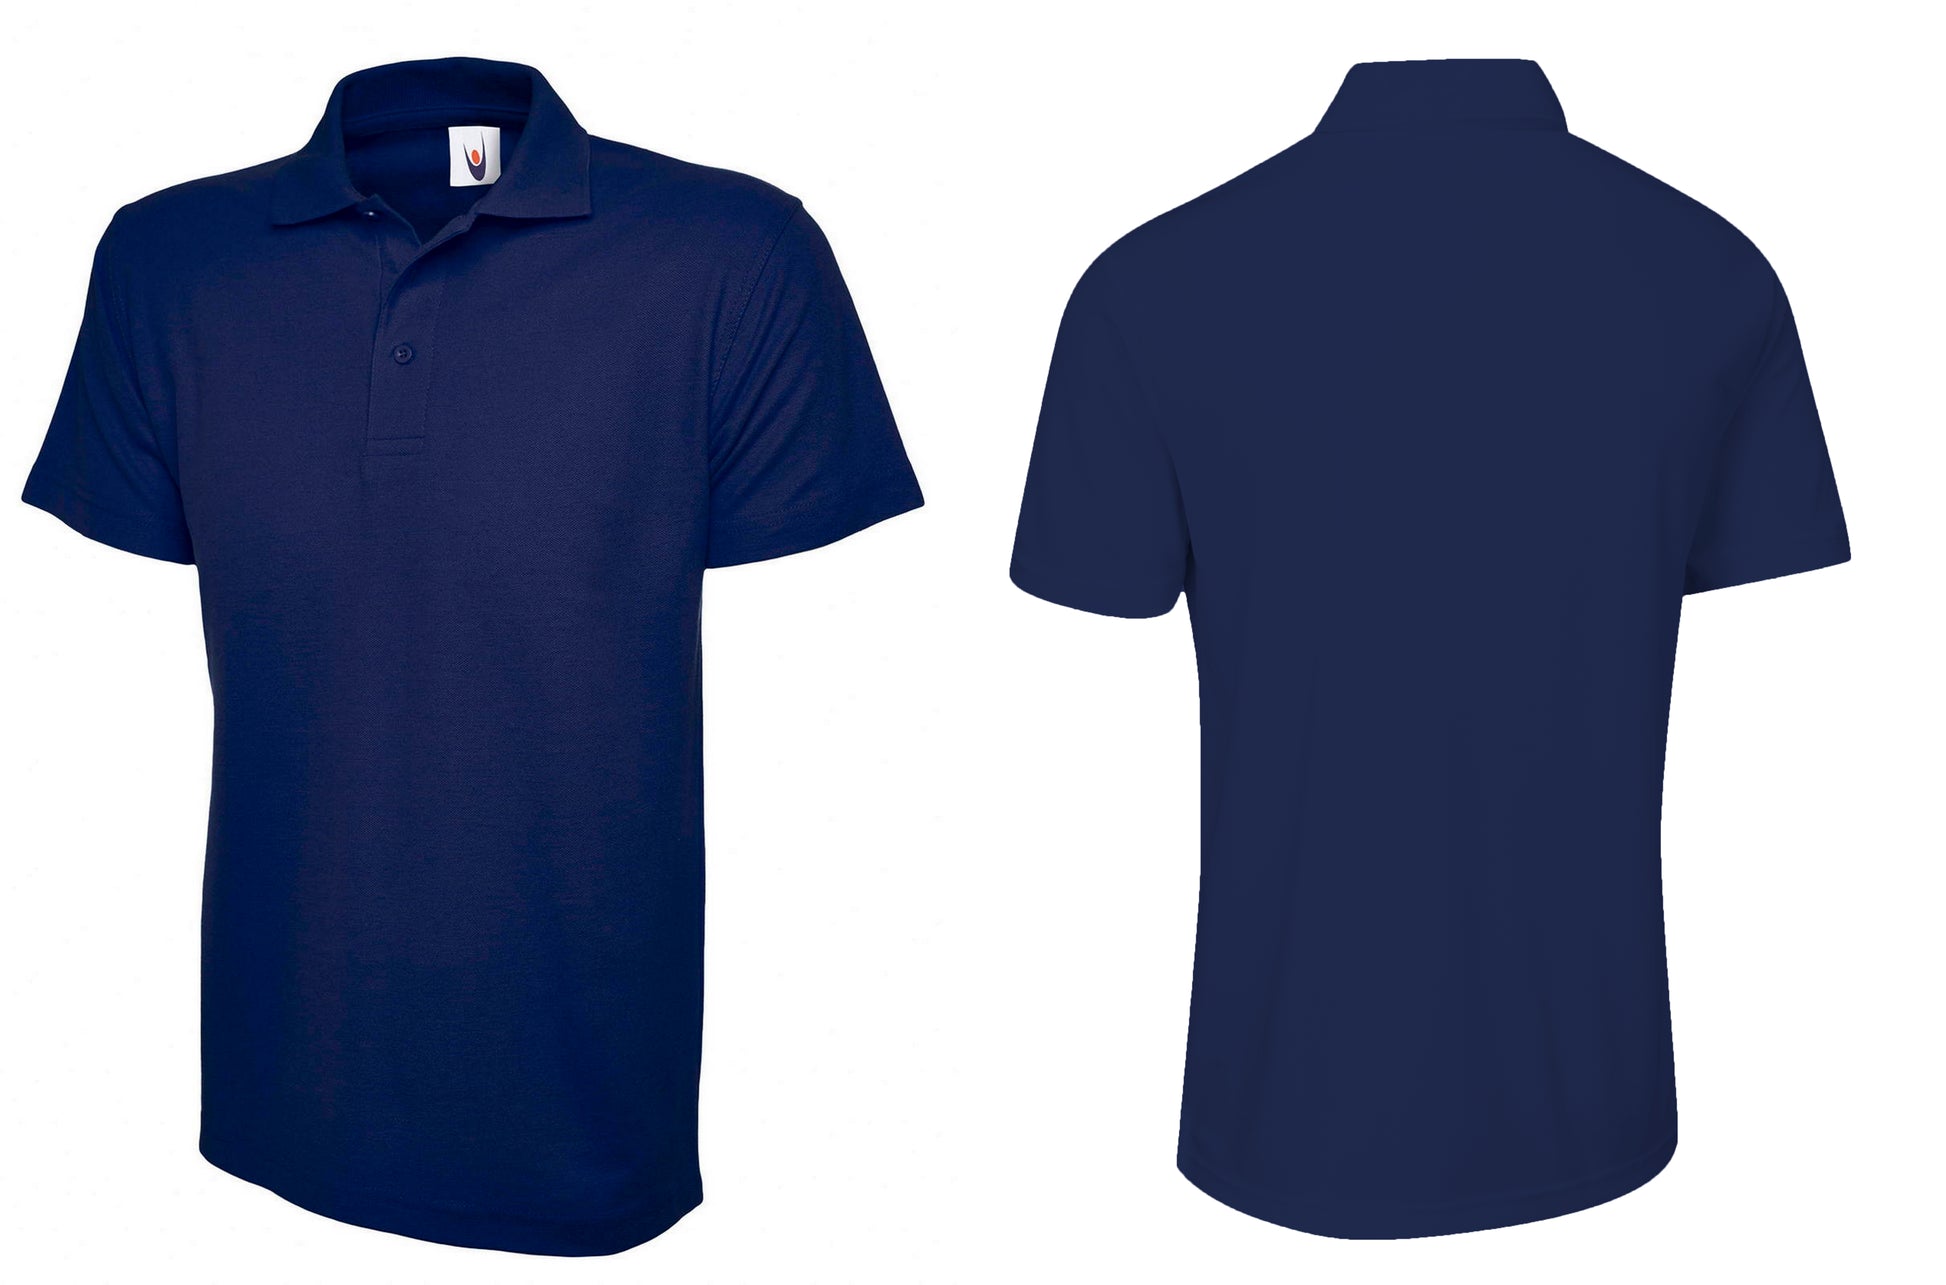 UC101 Classic Polo Shirt Colours - Trustsport